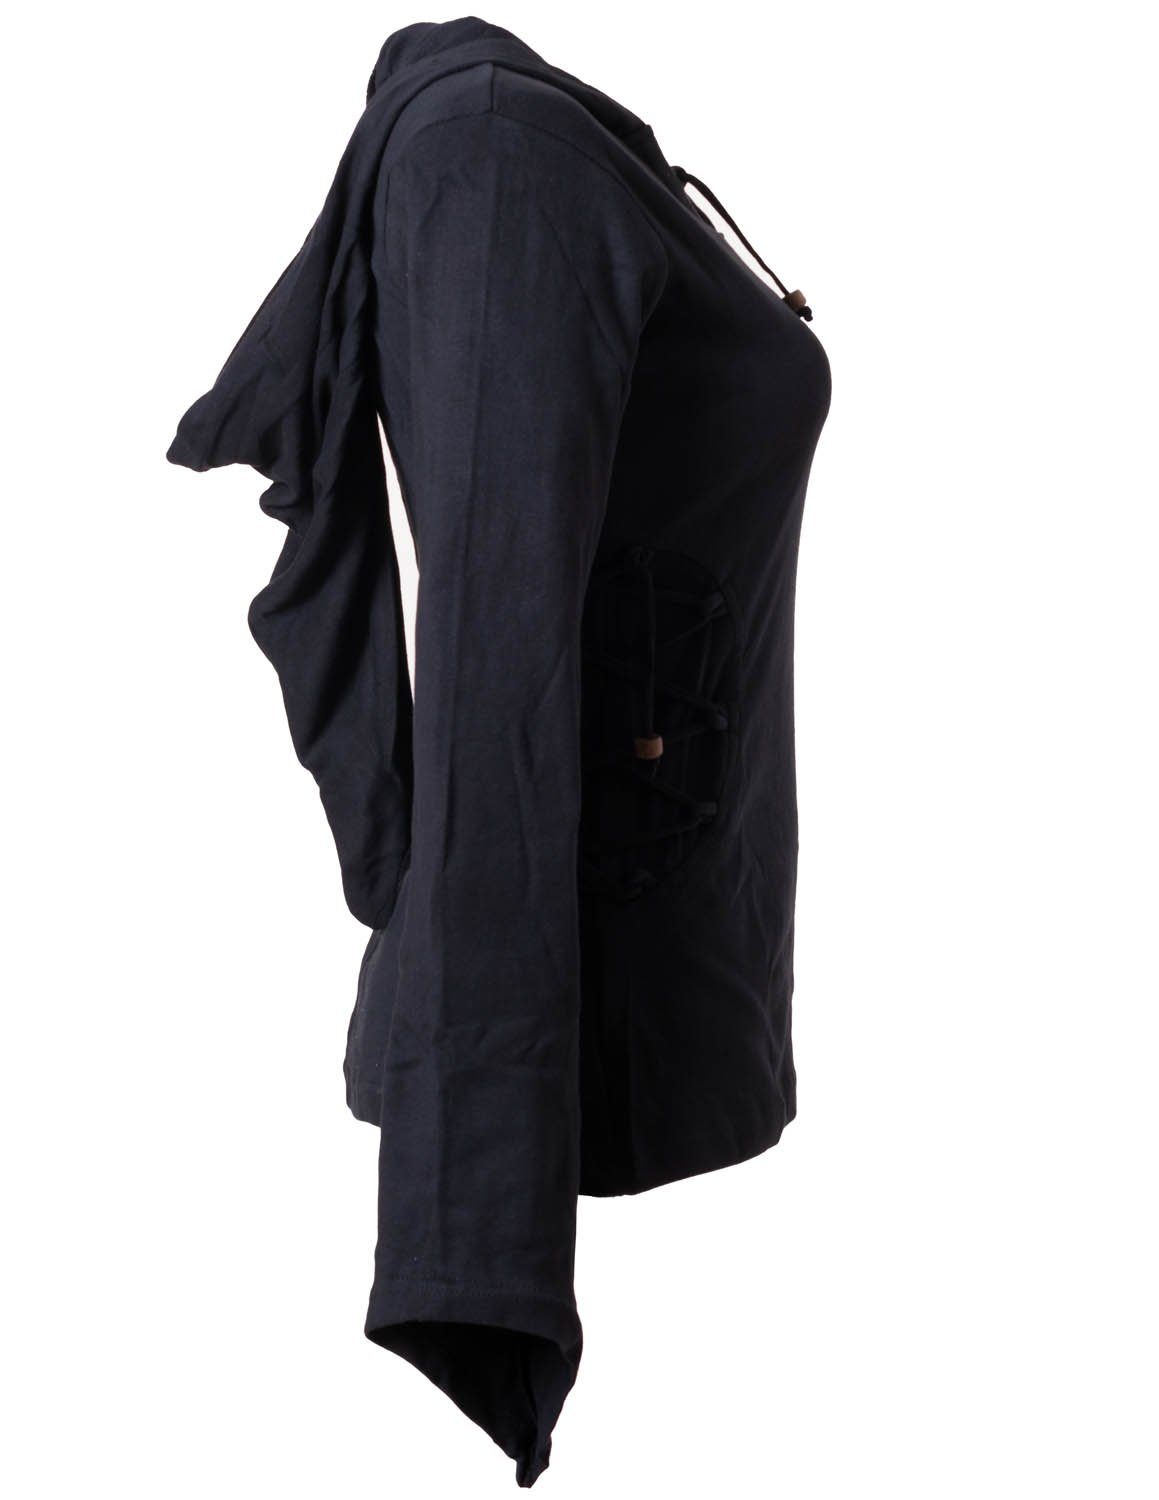 Vishes Style und Elfenshirt Bändern Gothik Zipfelkapuze schwarz Hoody, zum Ethno, Schnüren Kapuzenshirt